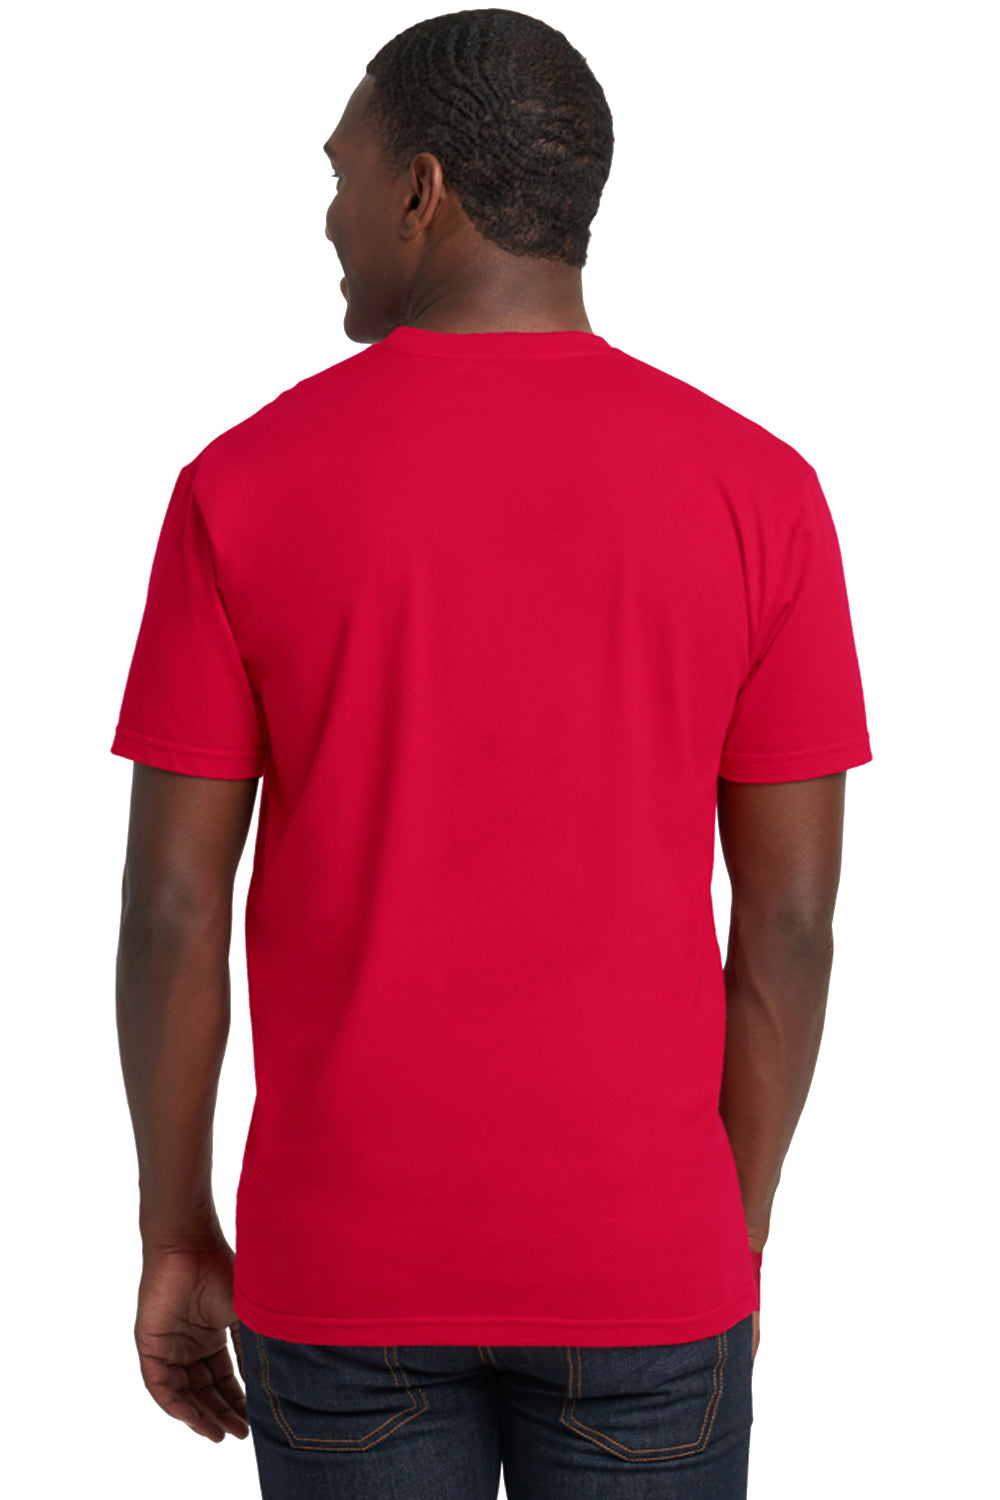 Next Level 3605 Fine Jersey Short Sleeve Crewneck T-Shirt w/ Pocket Red Back